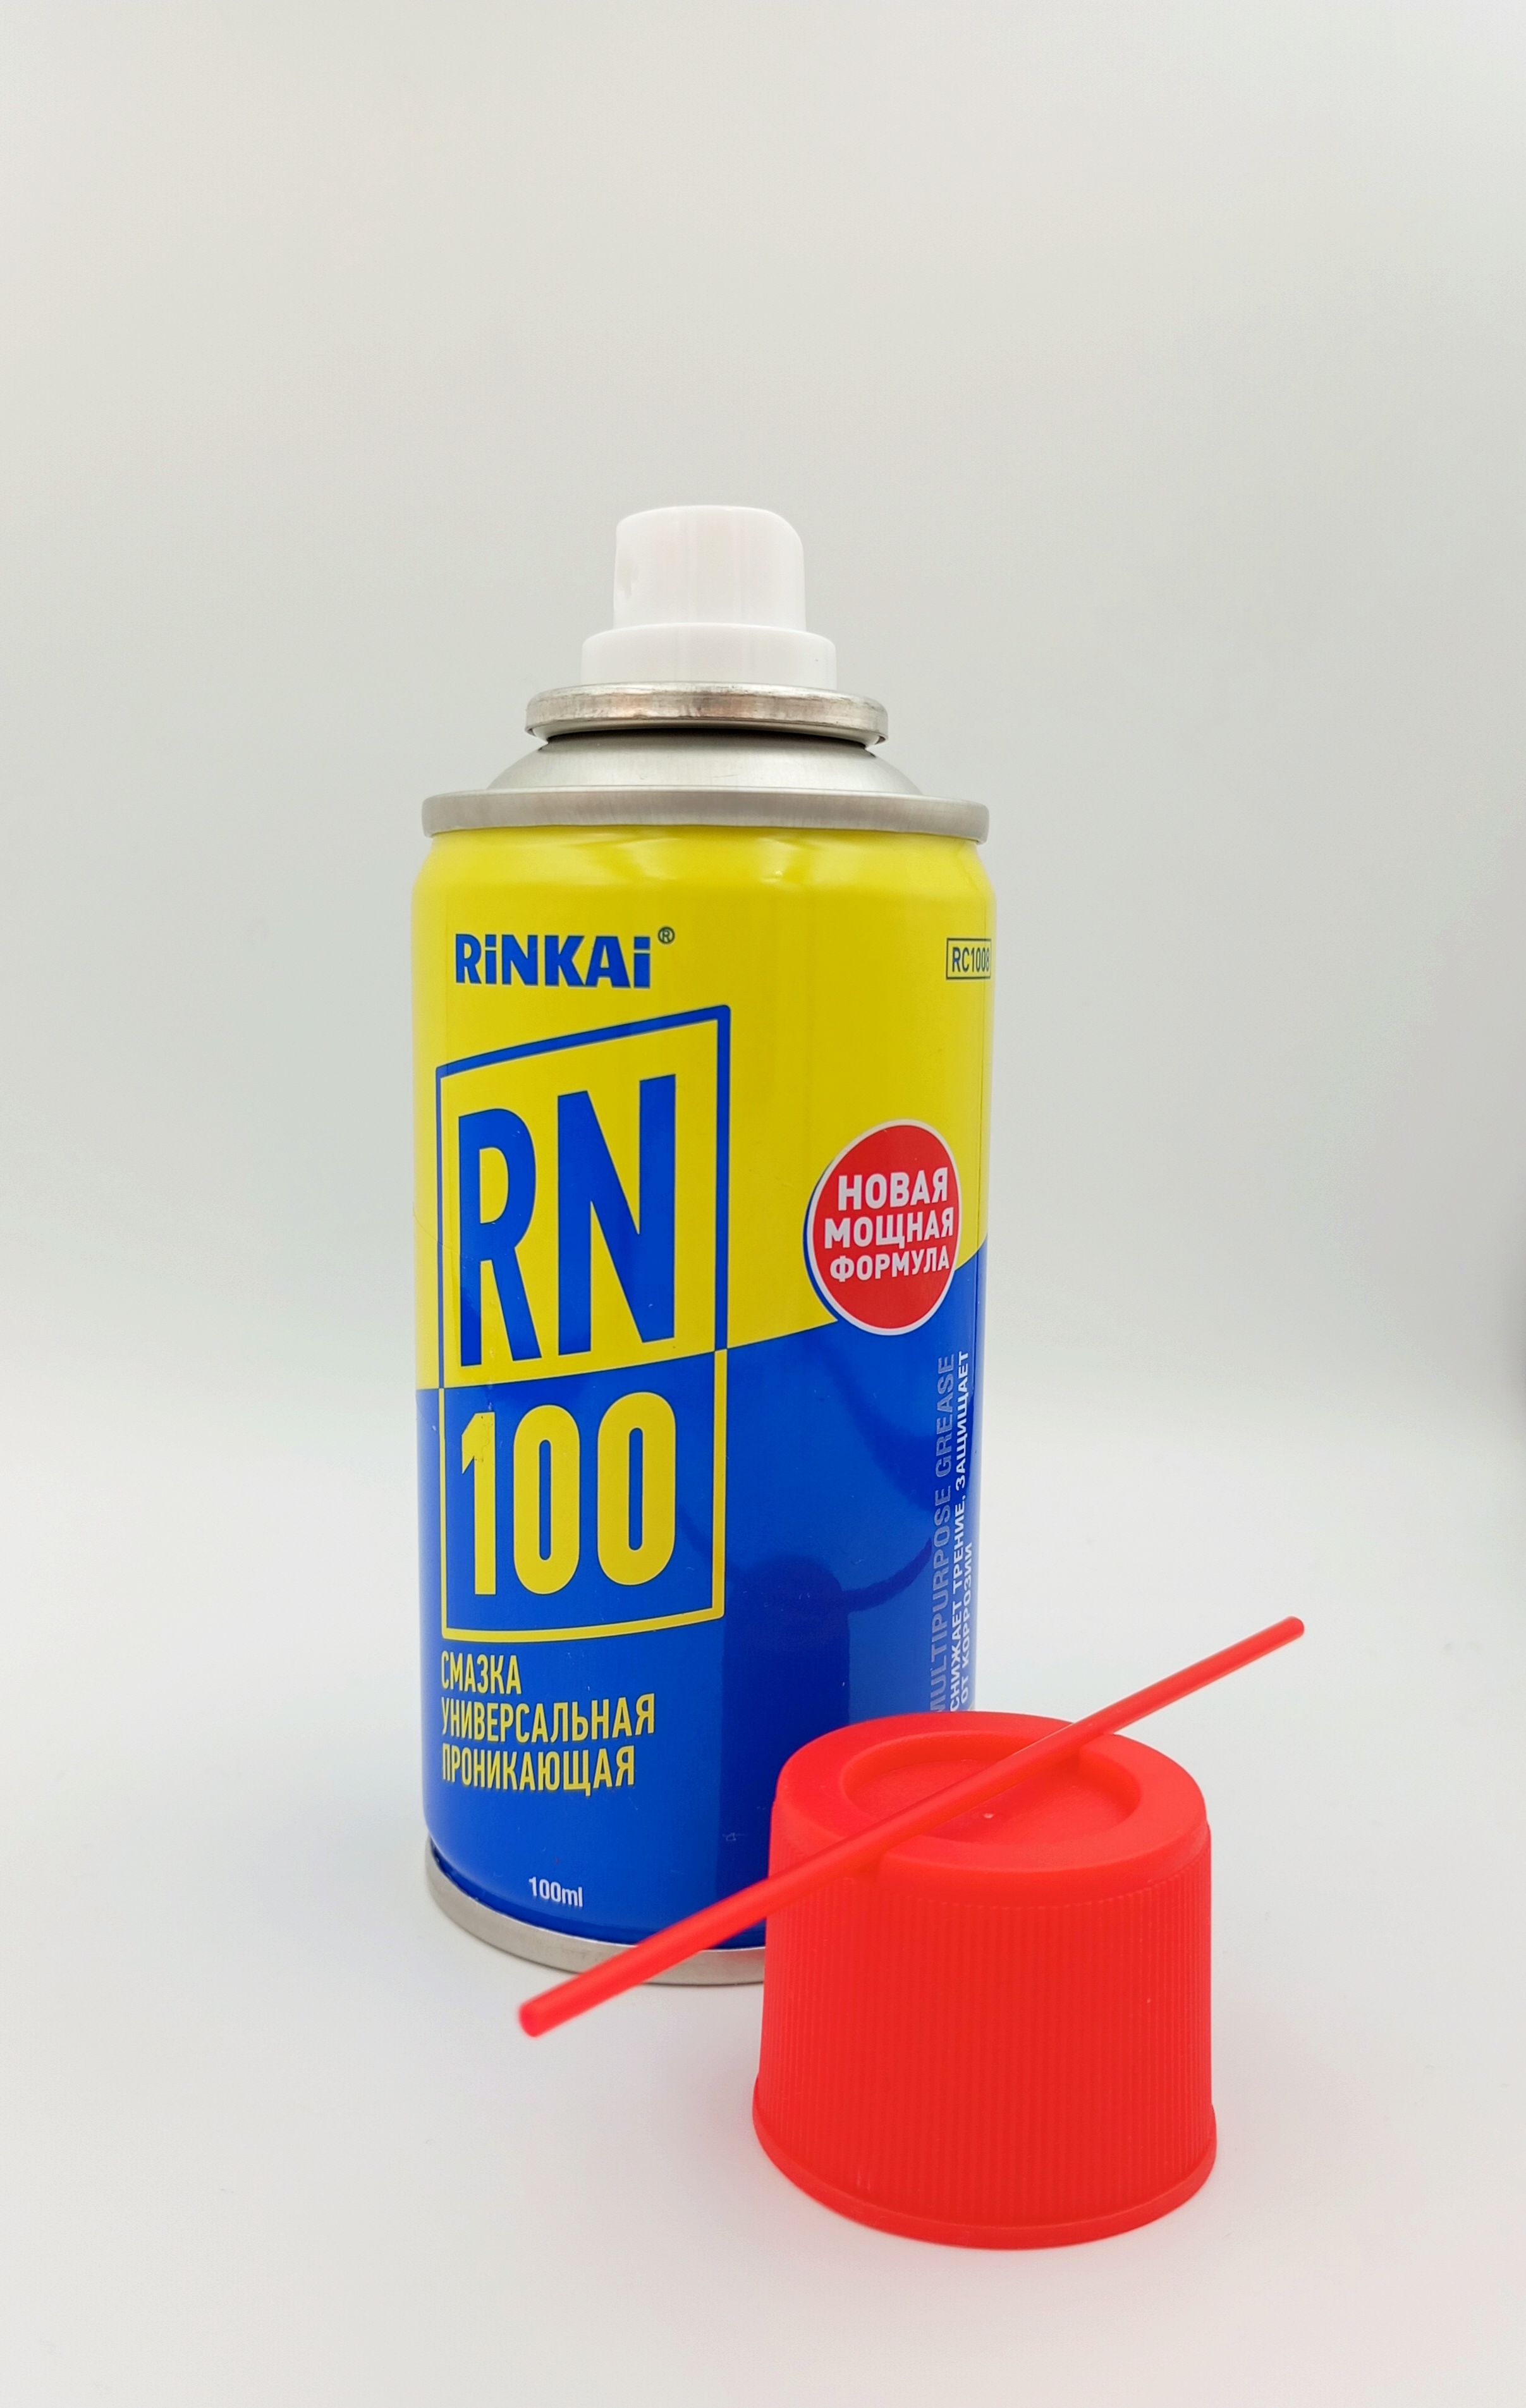 Rinkai RN100 Multipurpose Grease Универсальная проникающая смазка антикоррозийная 100 мл